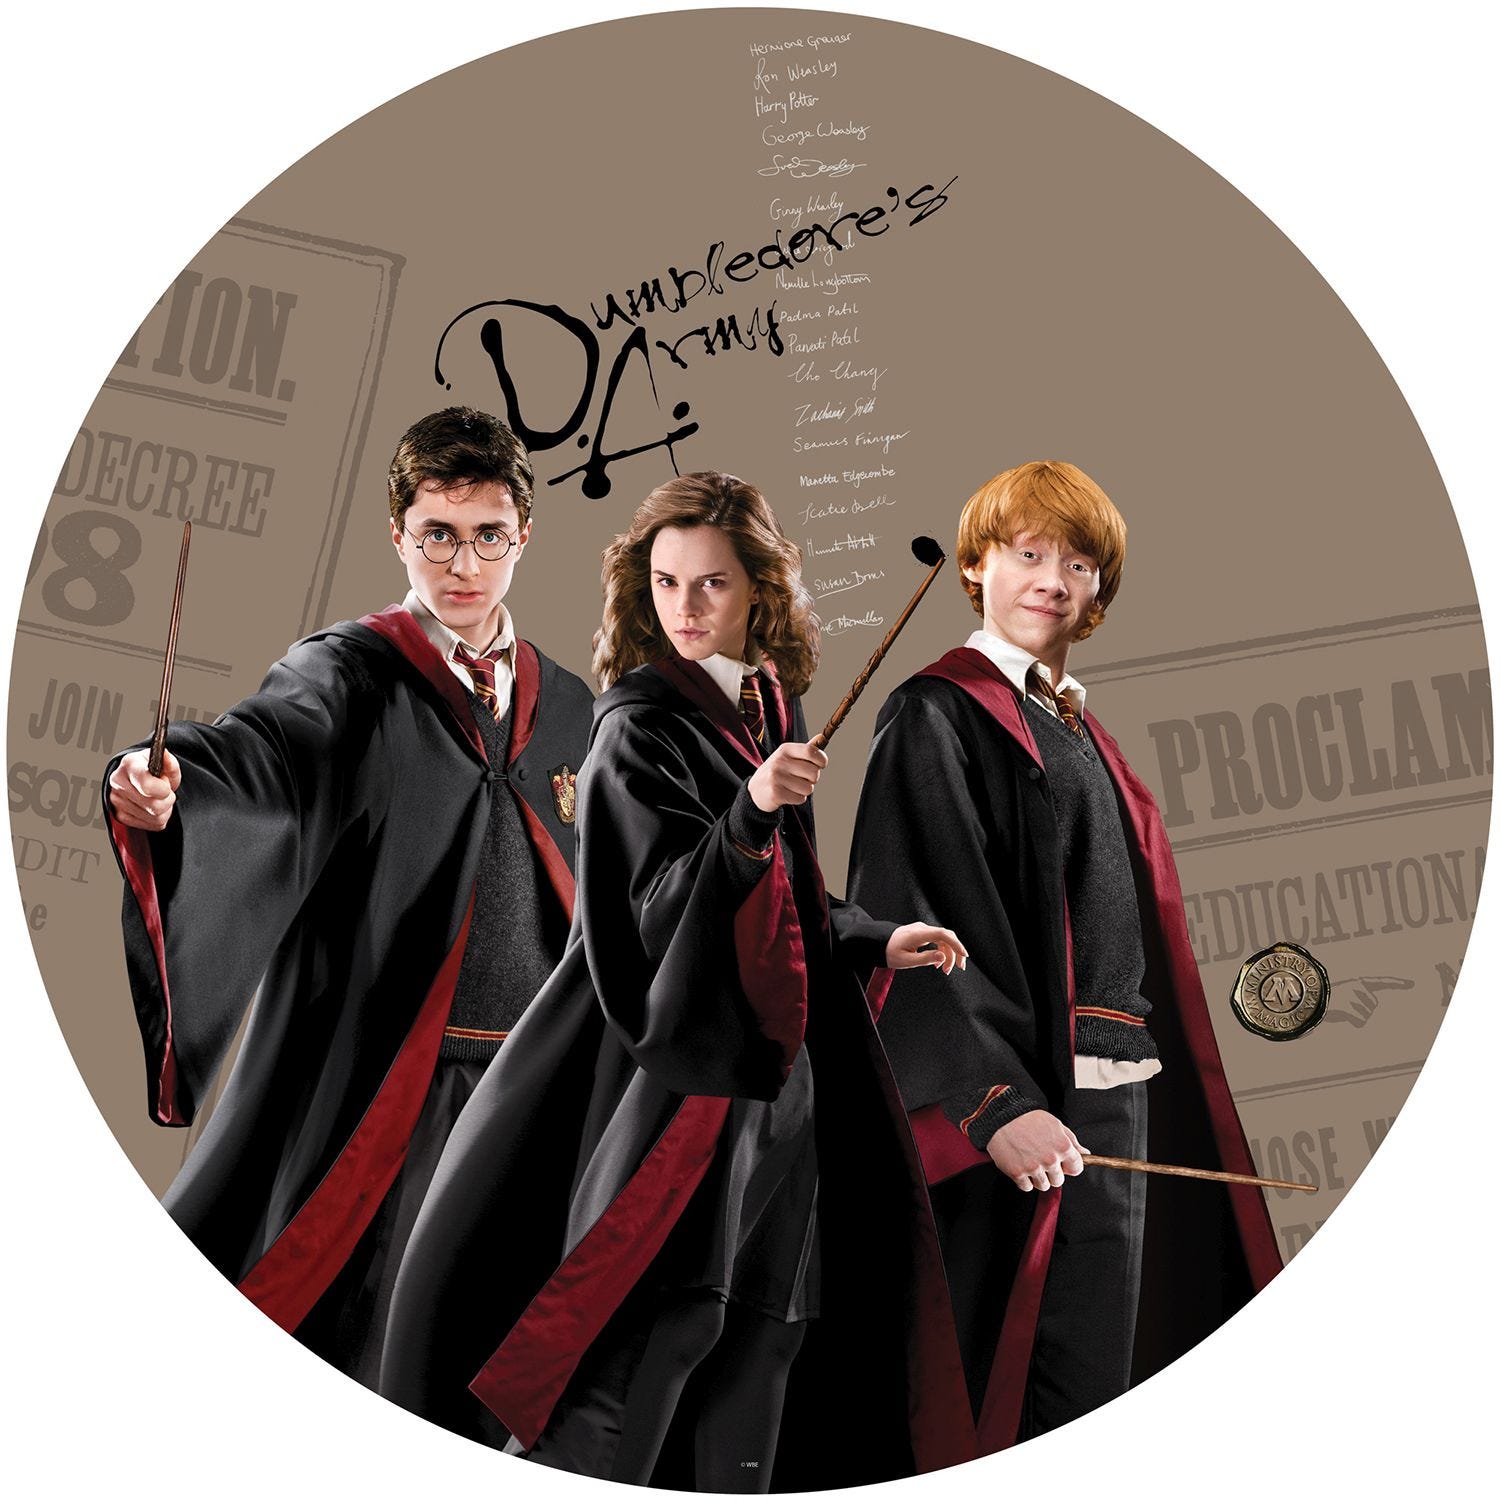 Fotomurale autoadhesivo tondo Harry Potter, Hermione Granger, Ron Weasley  beige, nero e rosso - Ø 70 cm - Sanders & Sanders